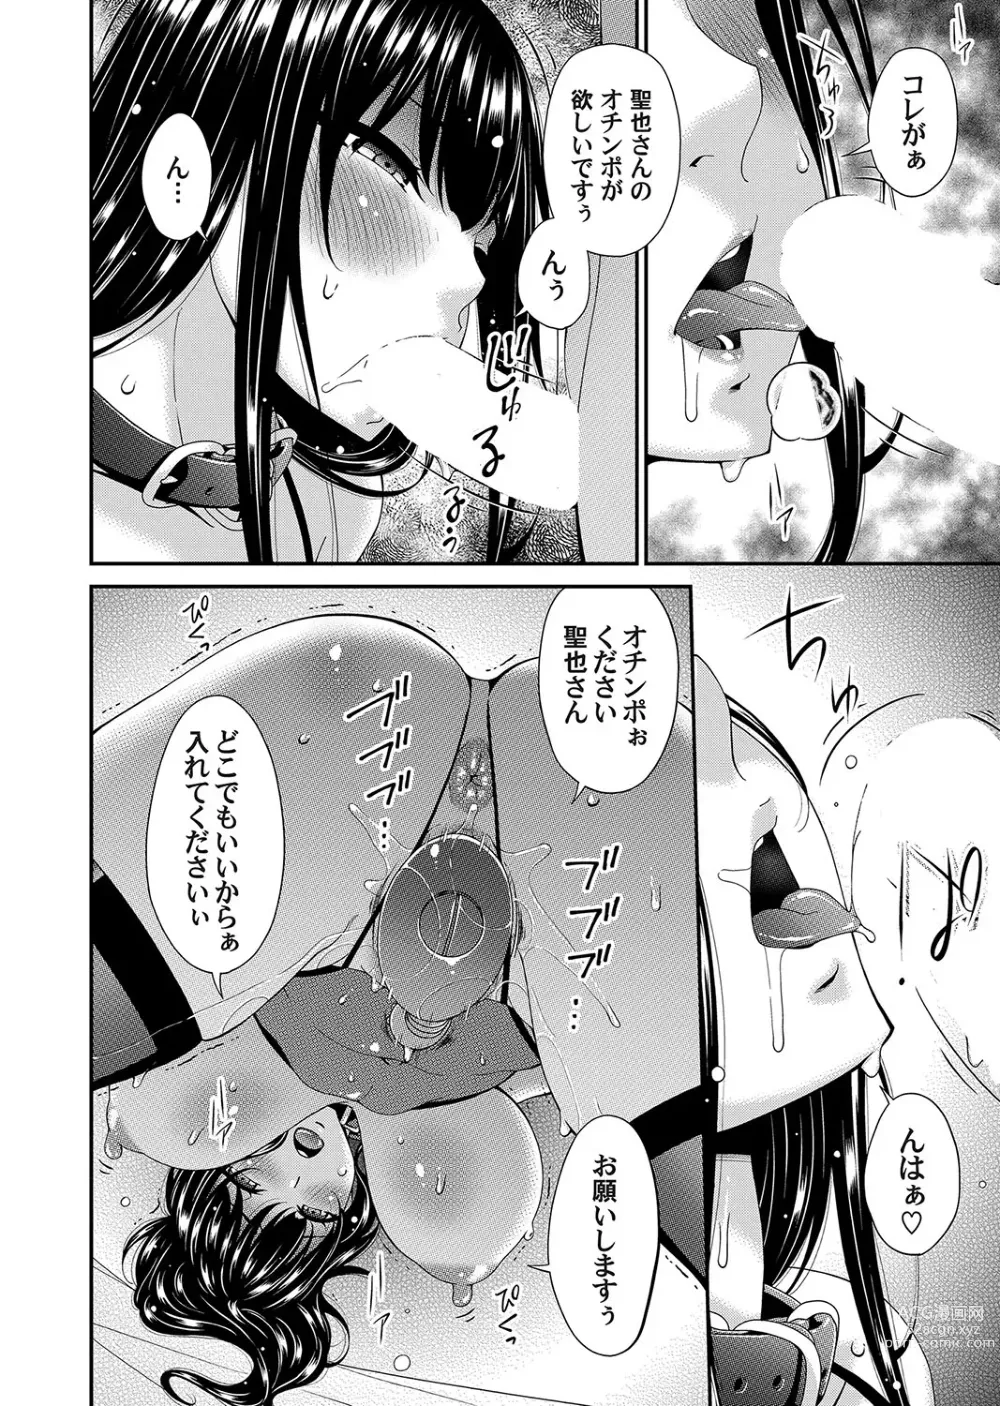 Page 3 of manga COMIC Magnum Vol. 173